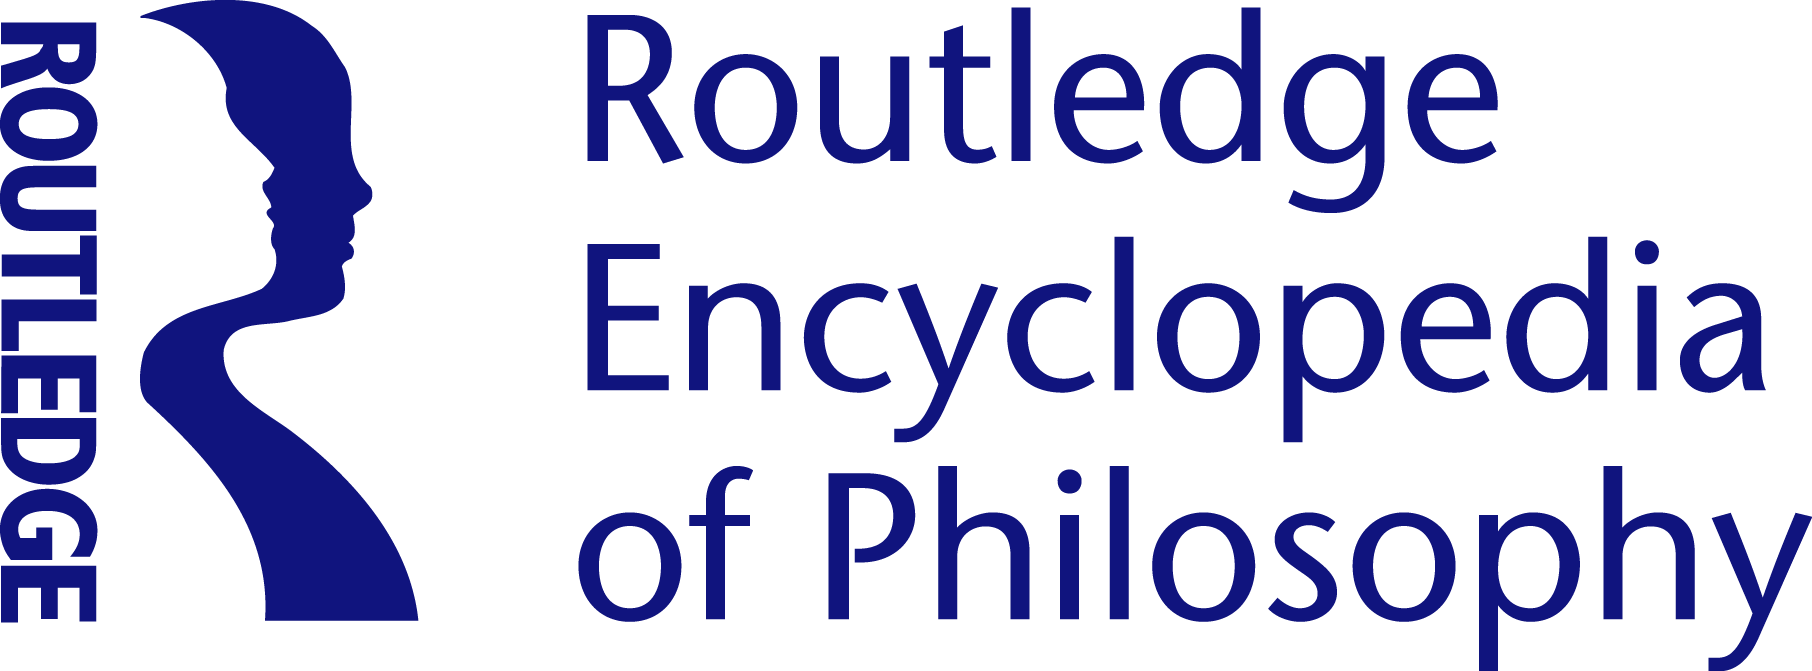 Routledge Encyclopedia of Philosophy